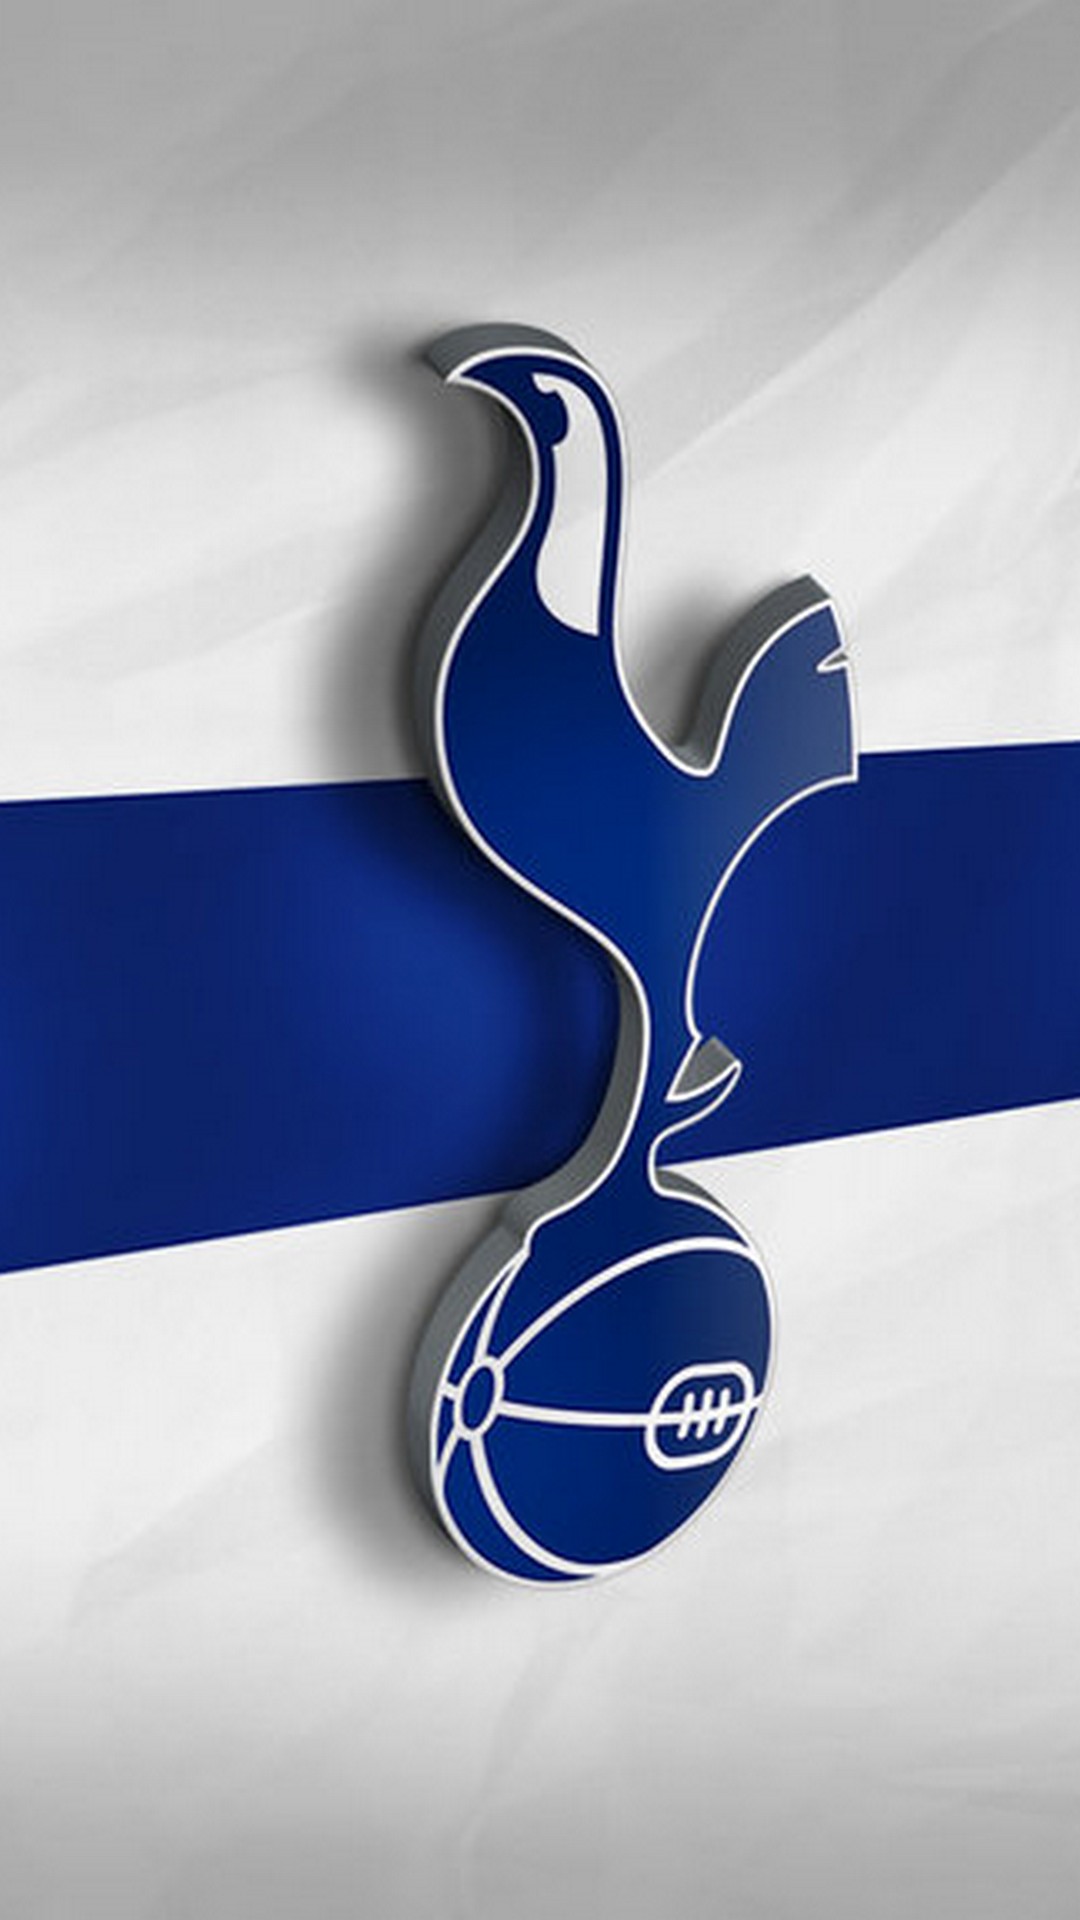 Wallpaper Iphone Tottenham Hotspur With High-resolution - Tottenham Hotspur Wallpaper Iphone - HD Wallpaper 